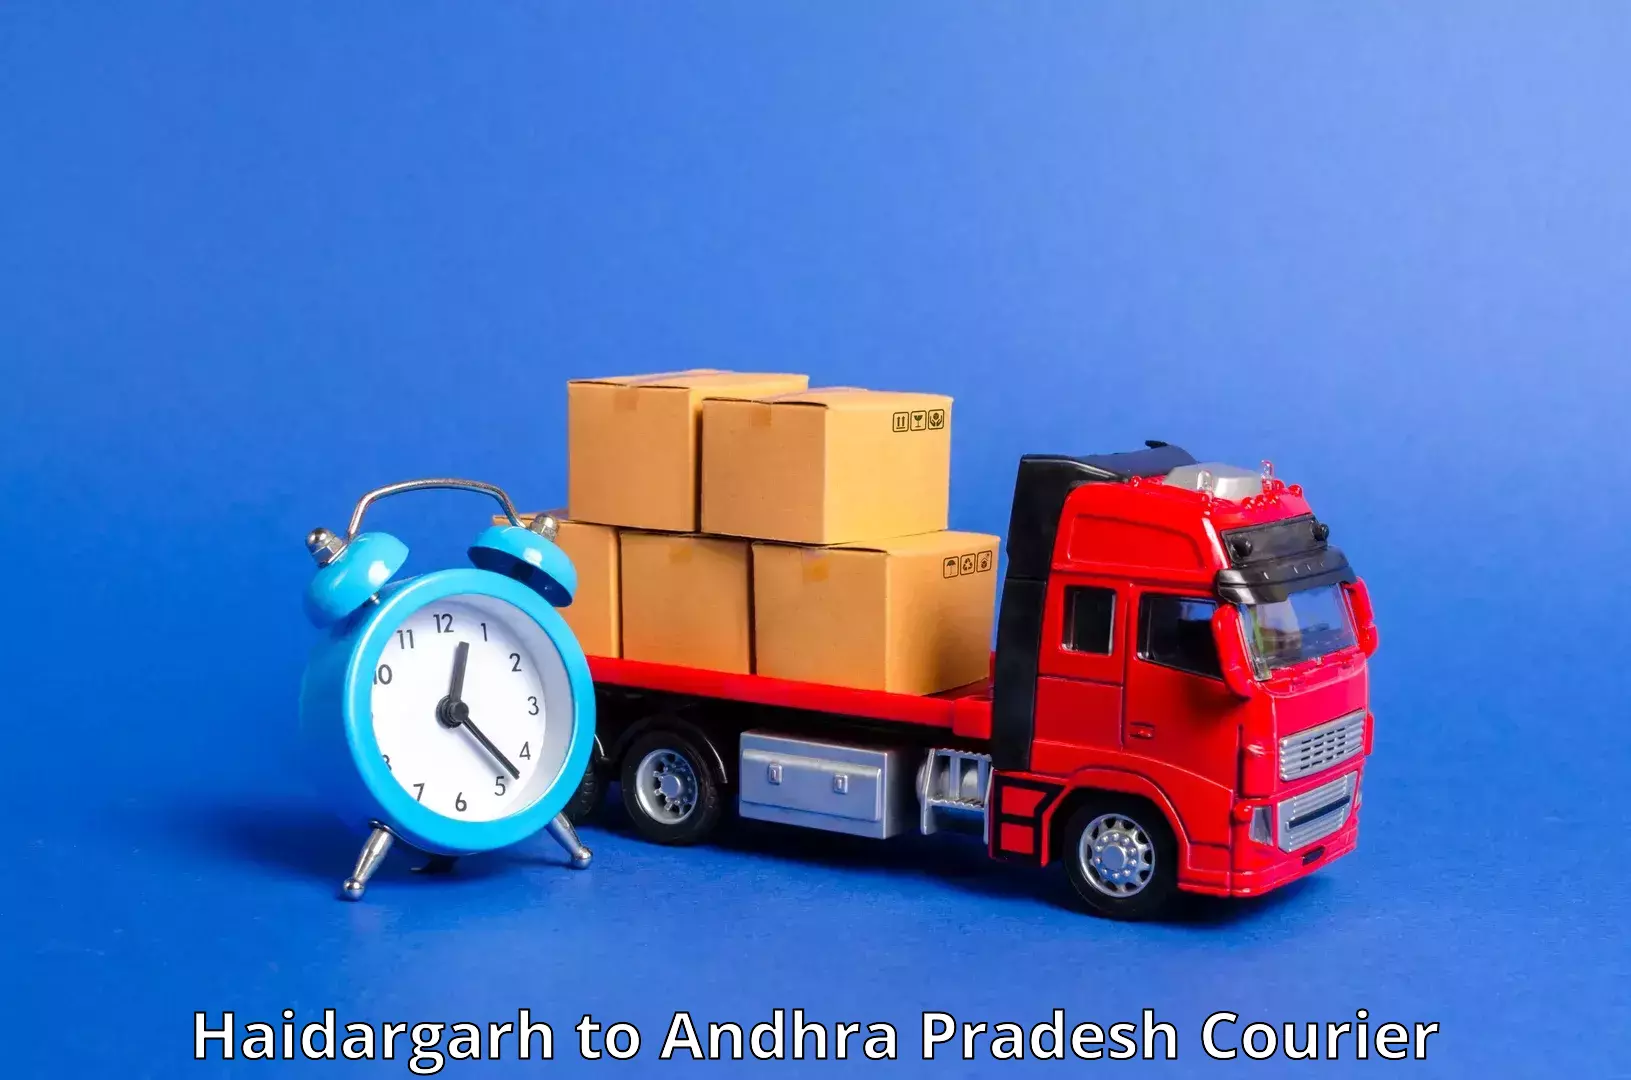 Punctual parcel services Haidargarh to Guntur